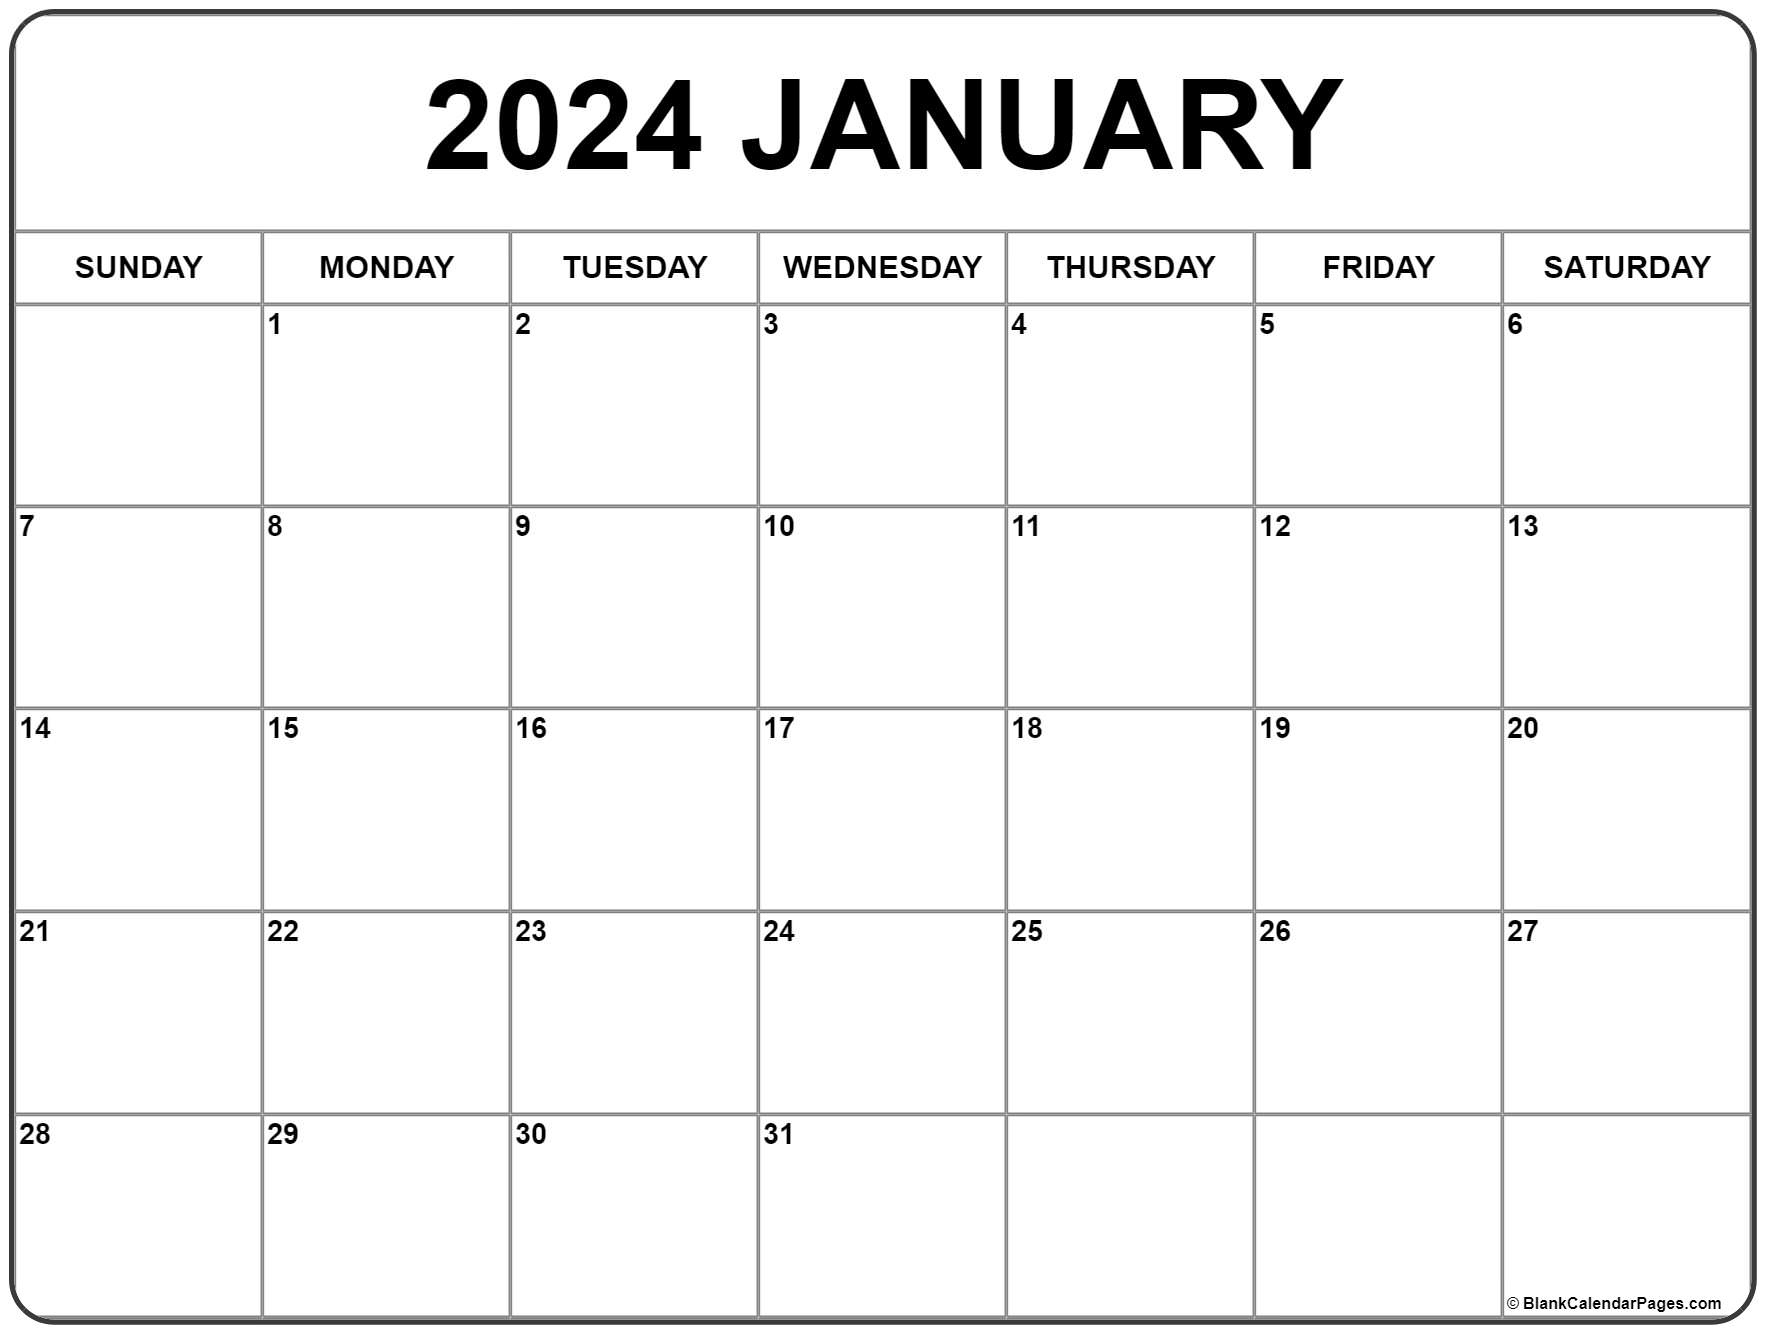 January 2024 Calendar | Free Printable Calendar | Printable Calendar 2024 January Free